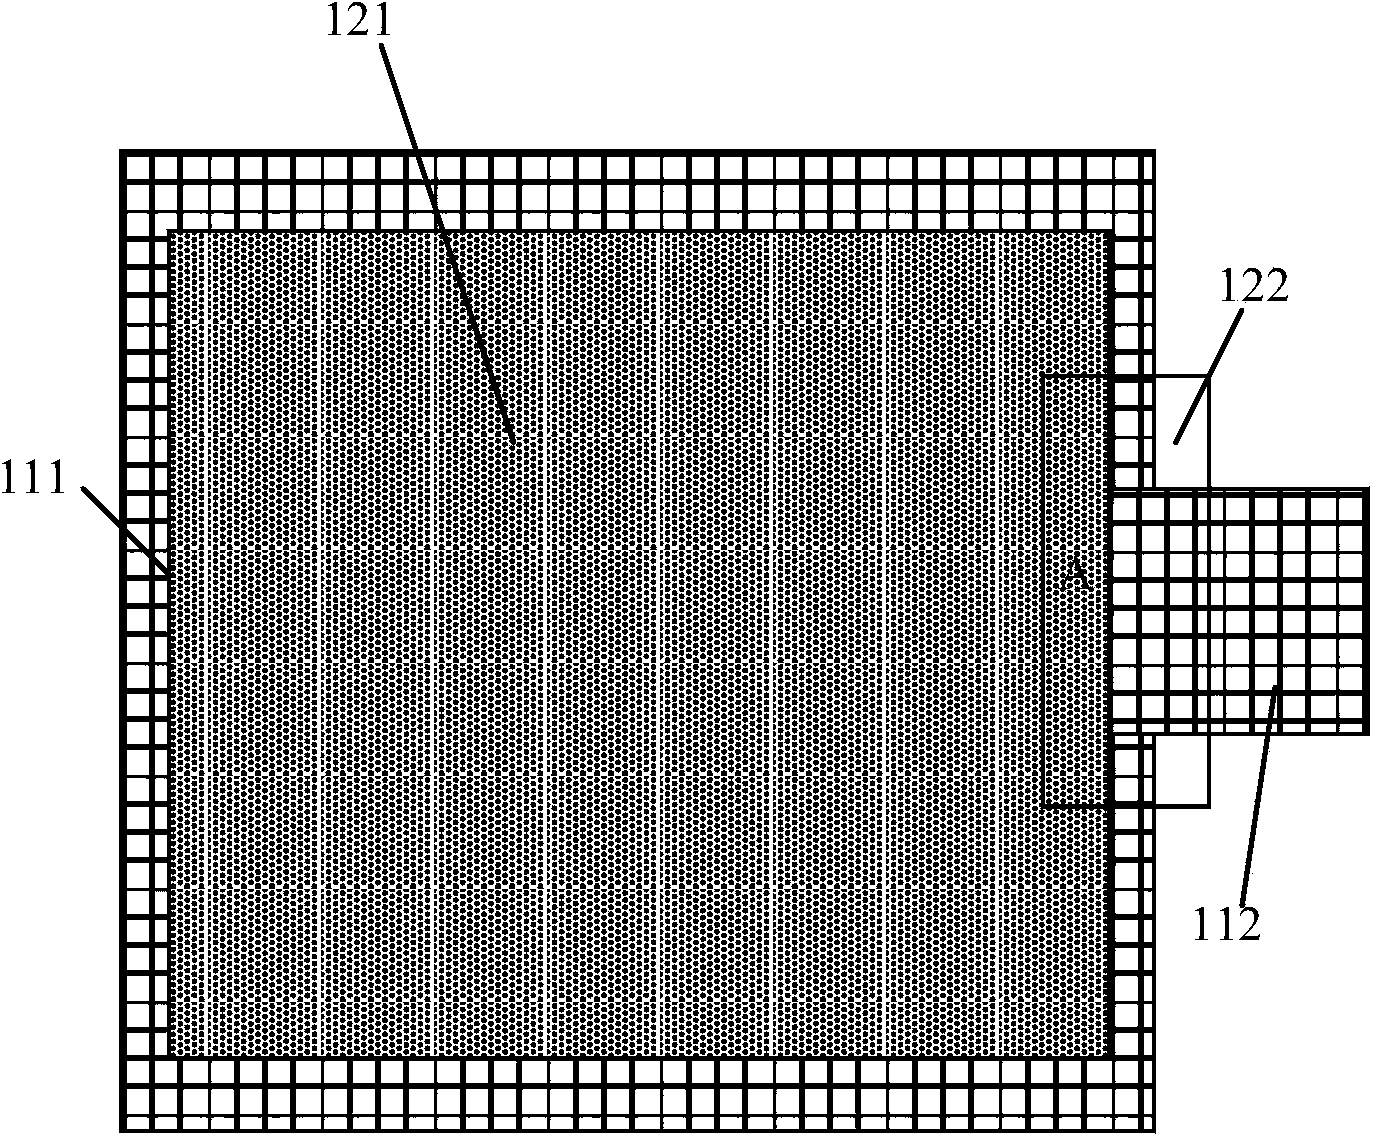 Pixel unit of CMOS image sensor